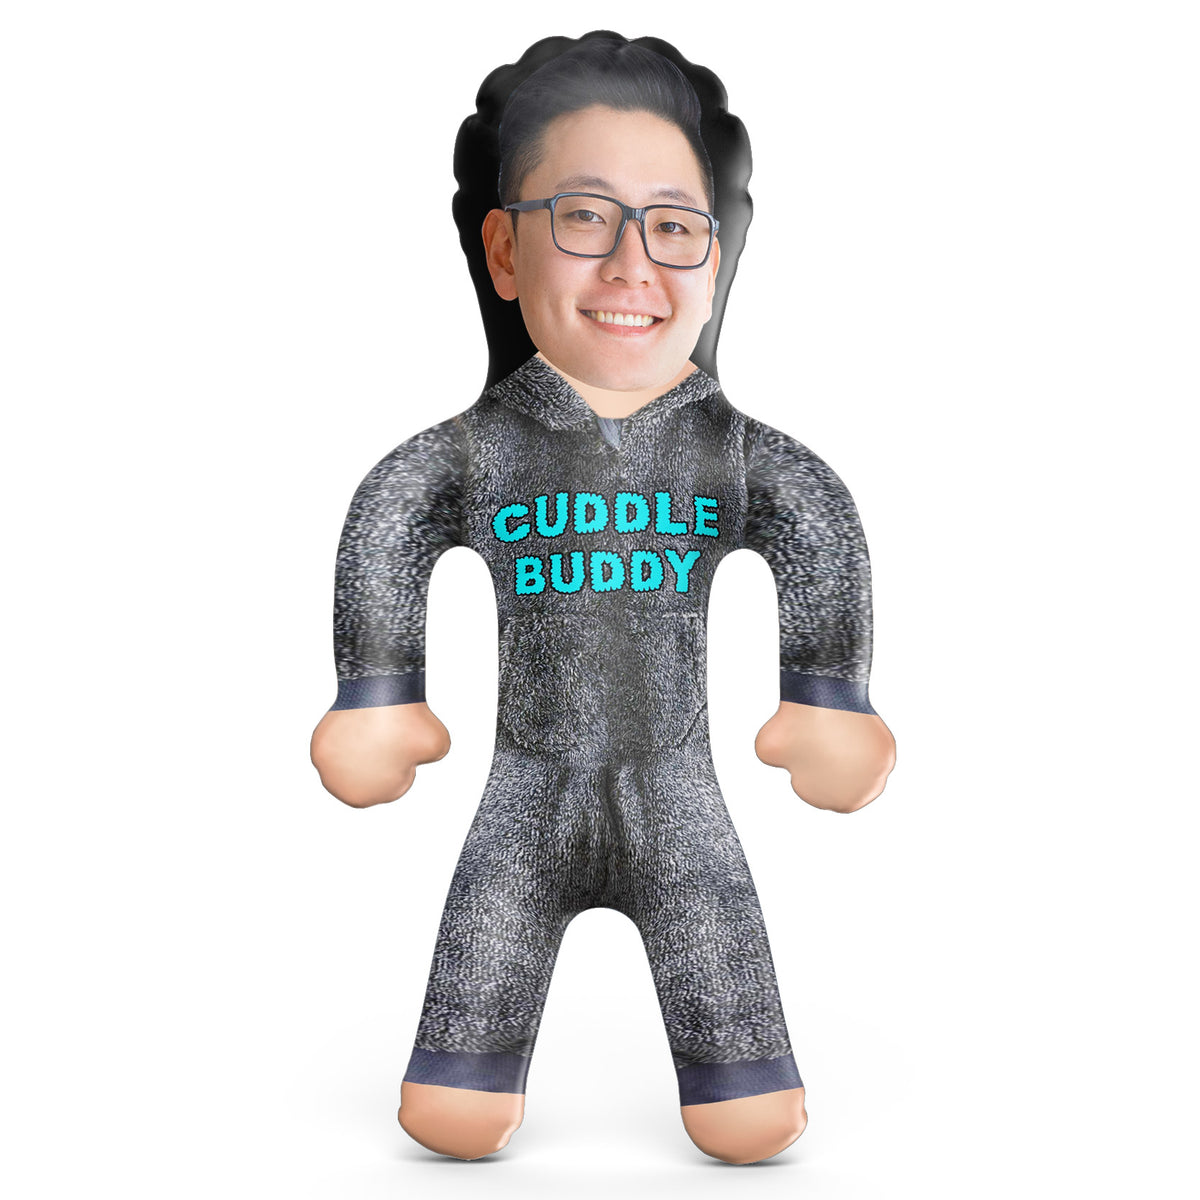  Cuddle Buddy Inflatable Doll - Cuddle Buddy Blow Up Doll